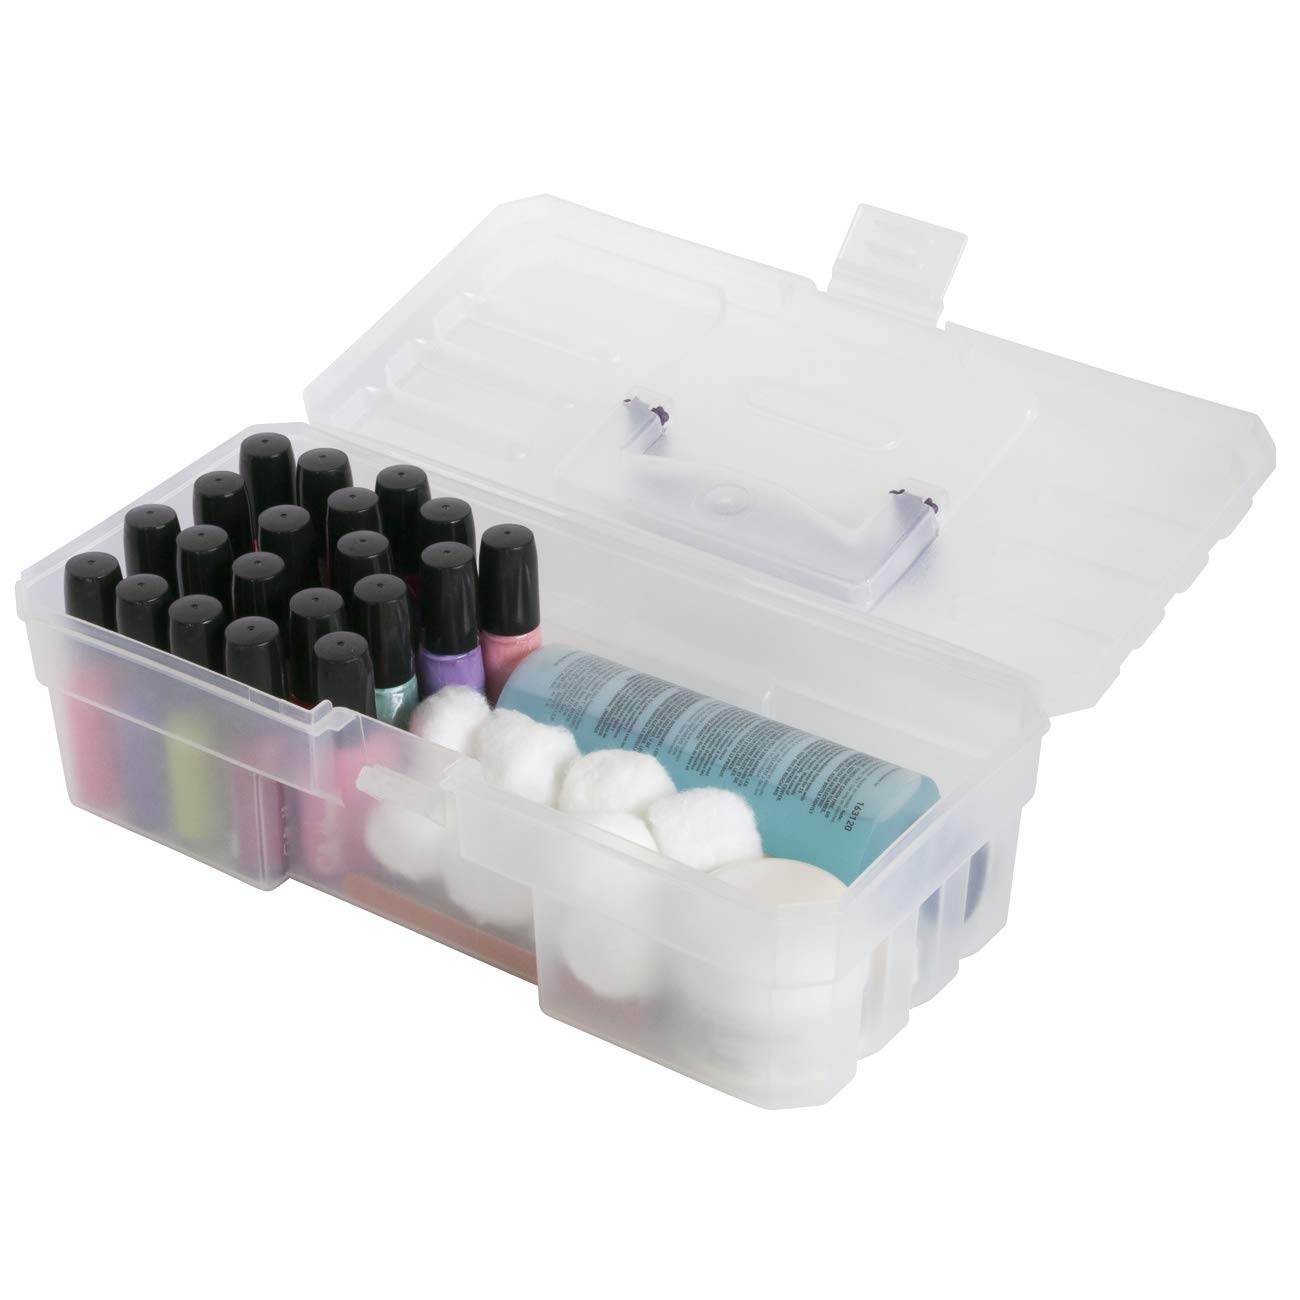 Akro-Mils 12-Inch ProBox Plastic Art Supply, Hobby or Craft Storage Tool Box, Clear, 09912CLPUR, 12